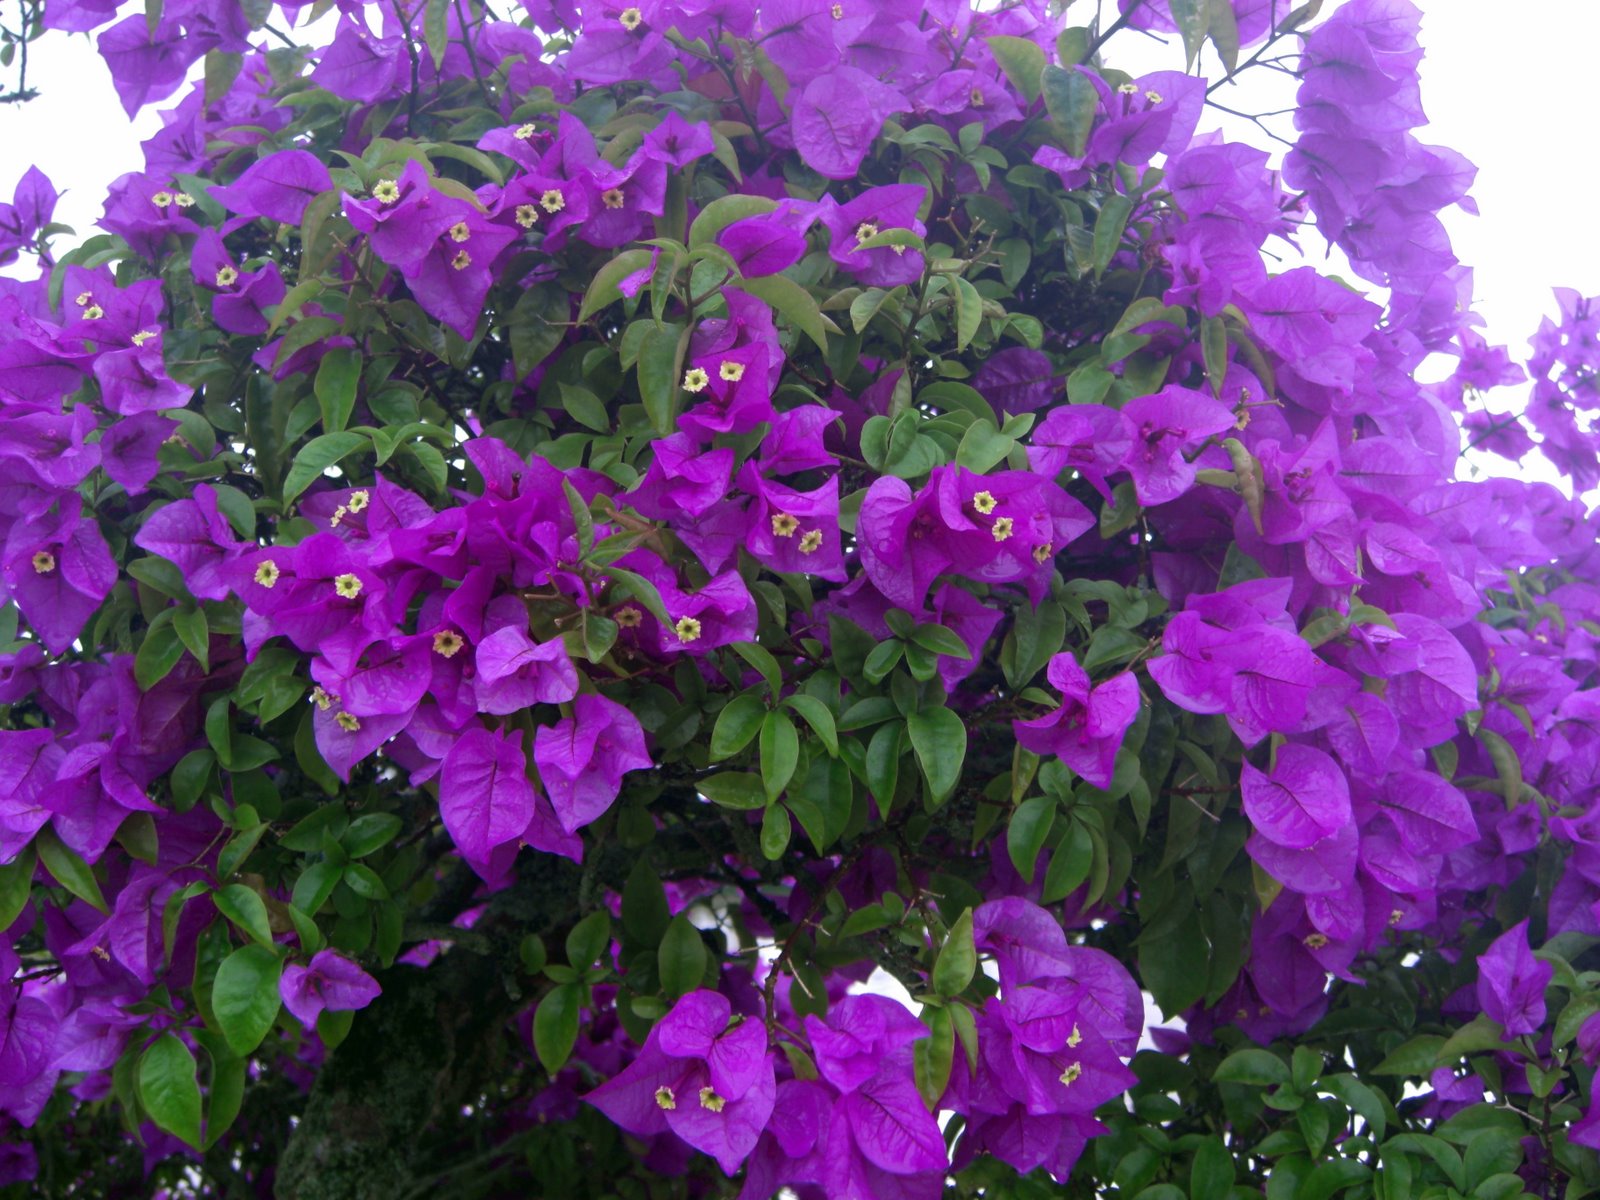 File:Purple bush of bougainvilliers.jpg - Wikimedia Commons